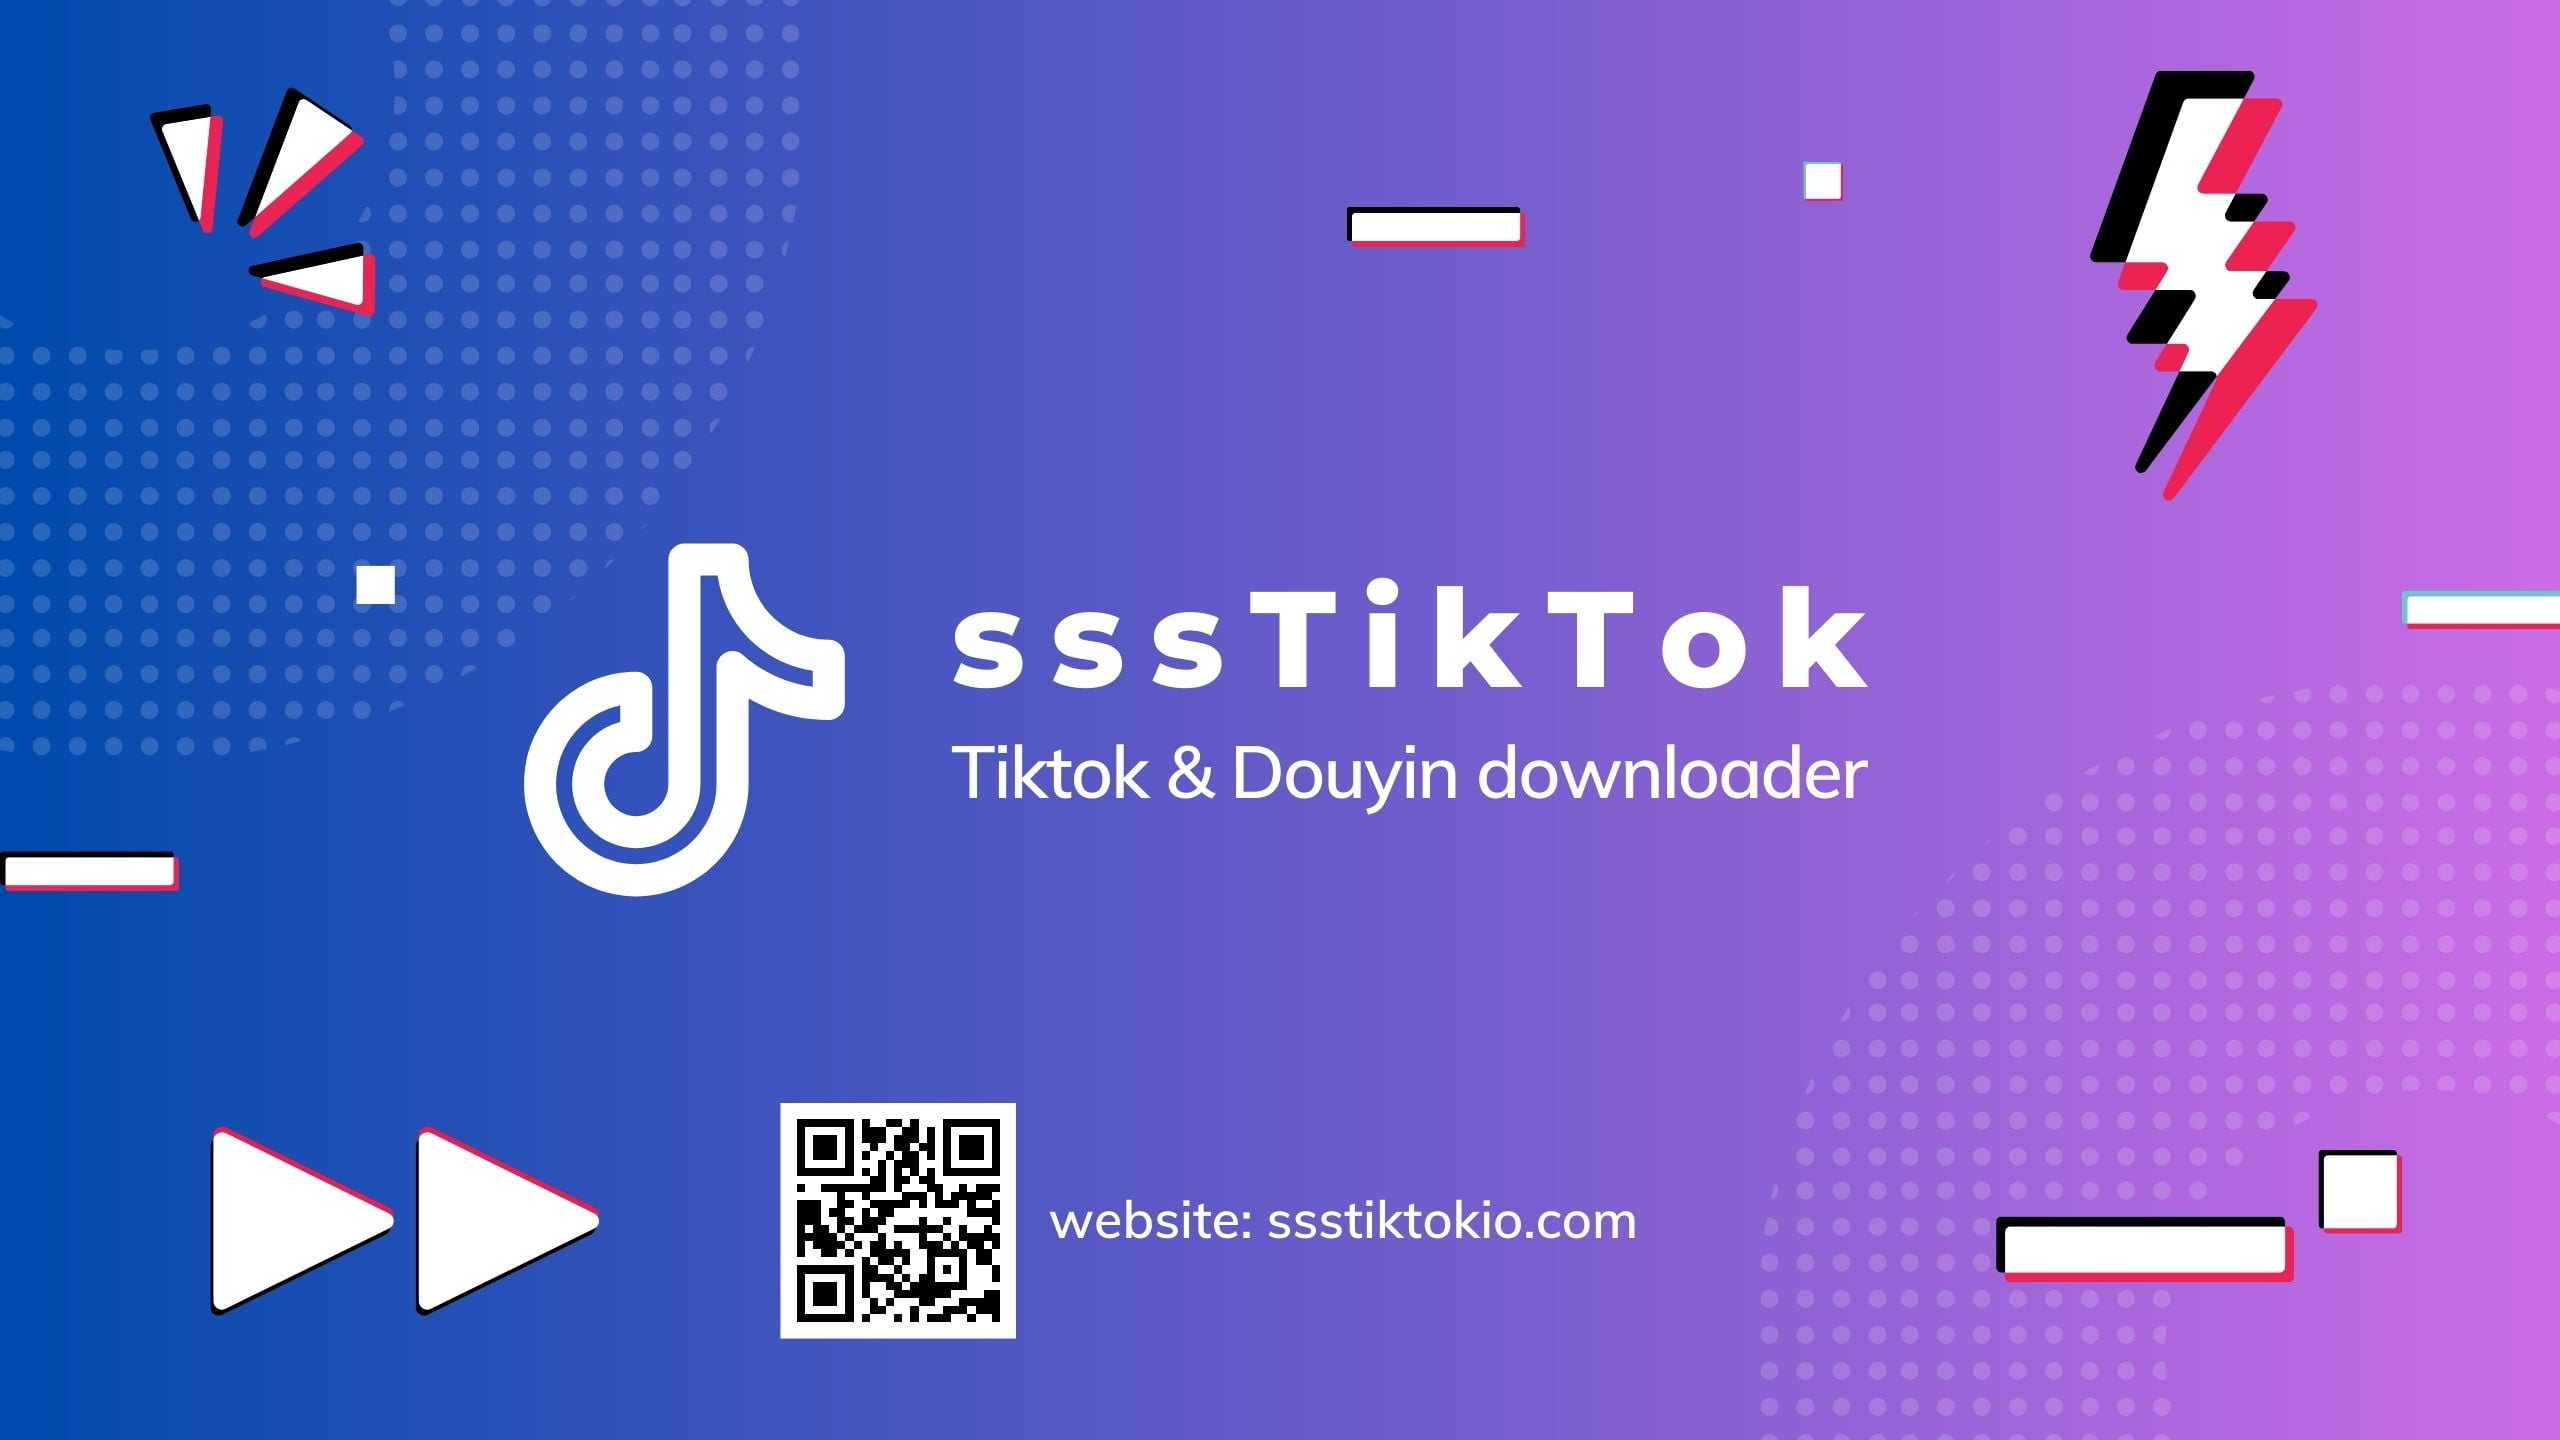 sssTiktok - Online Tiktok Downloader - Free Tiktok Video Download